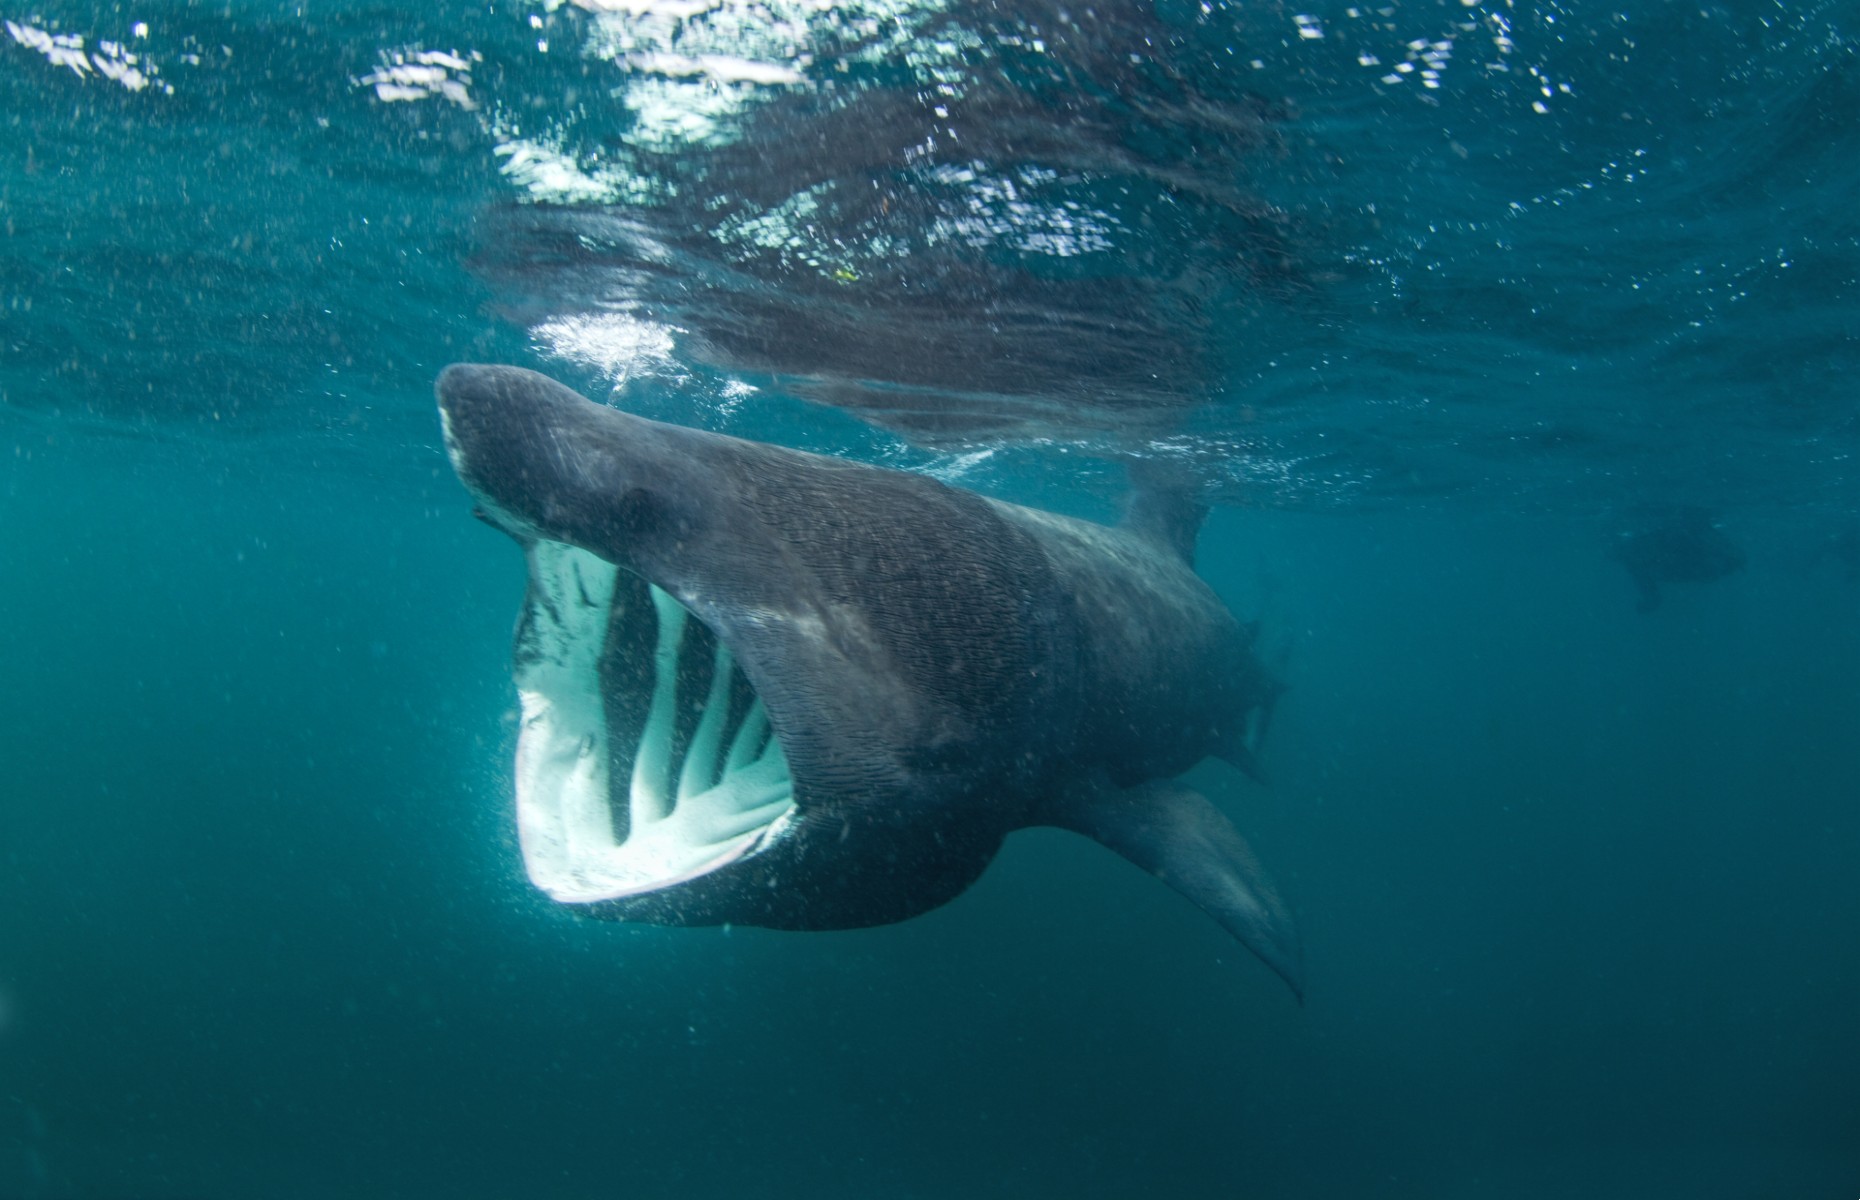 Basking shark with its mouth open (Image: Martin Prochazkacz/Shutterstock)